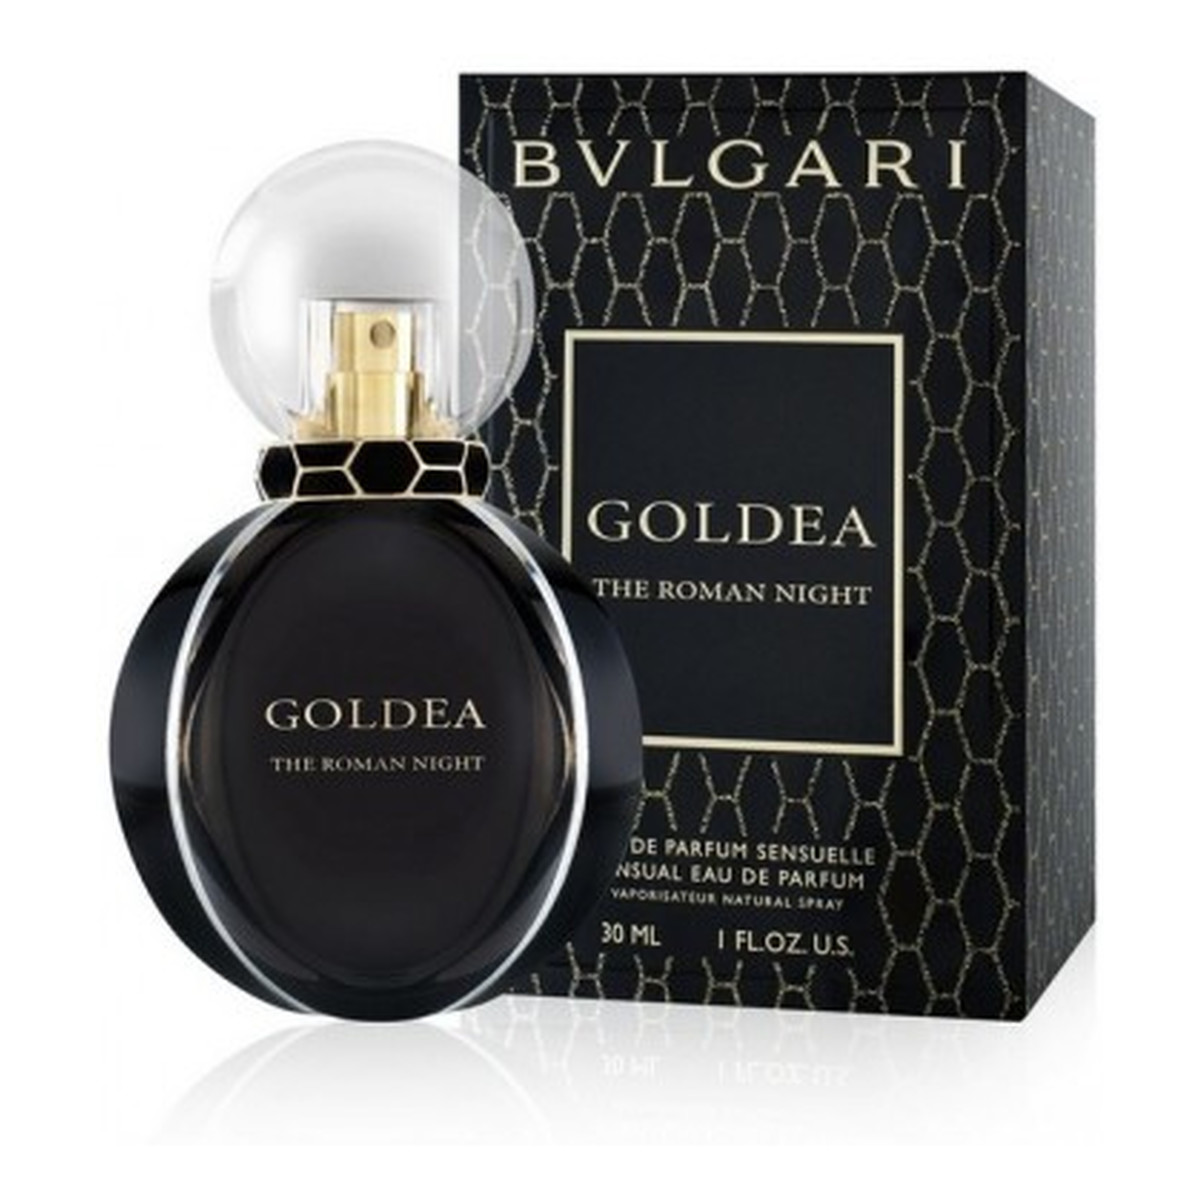 Bvlgari Goldea The Roman Night woda perfumowana 30ml